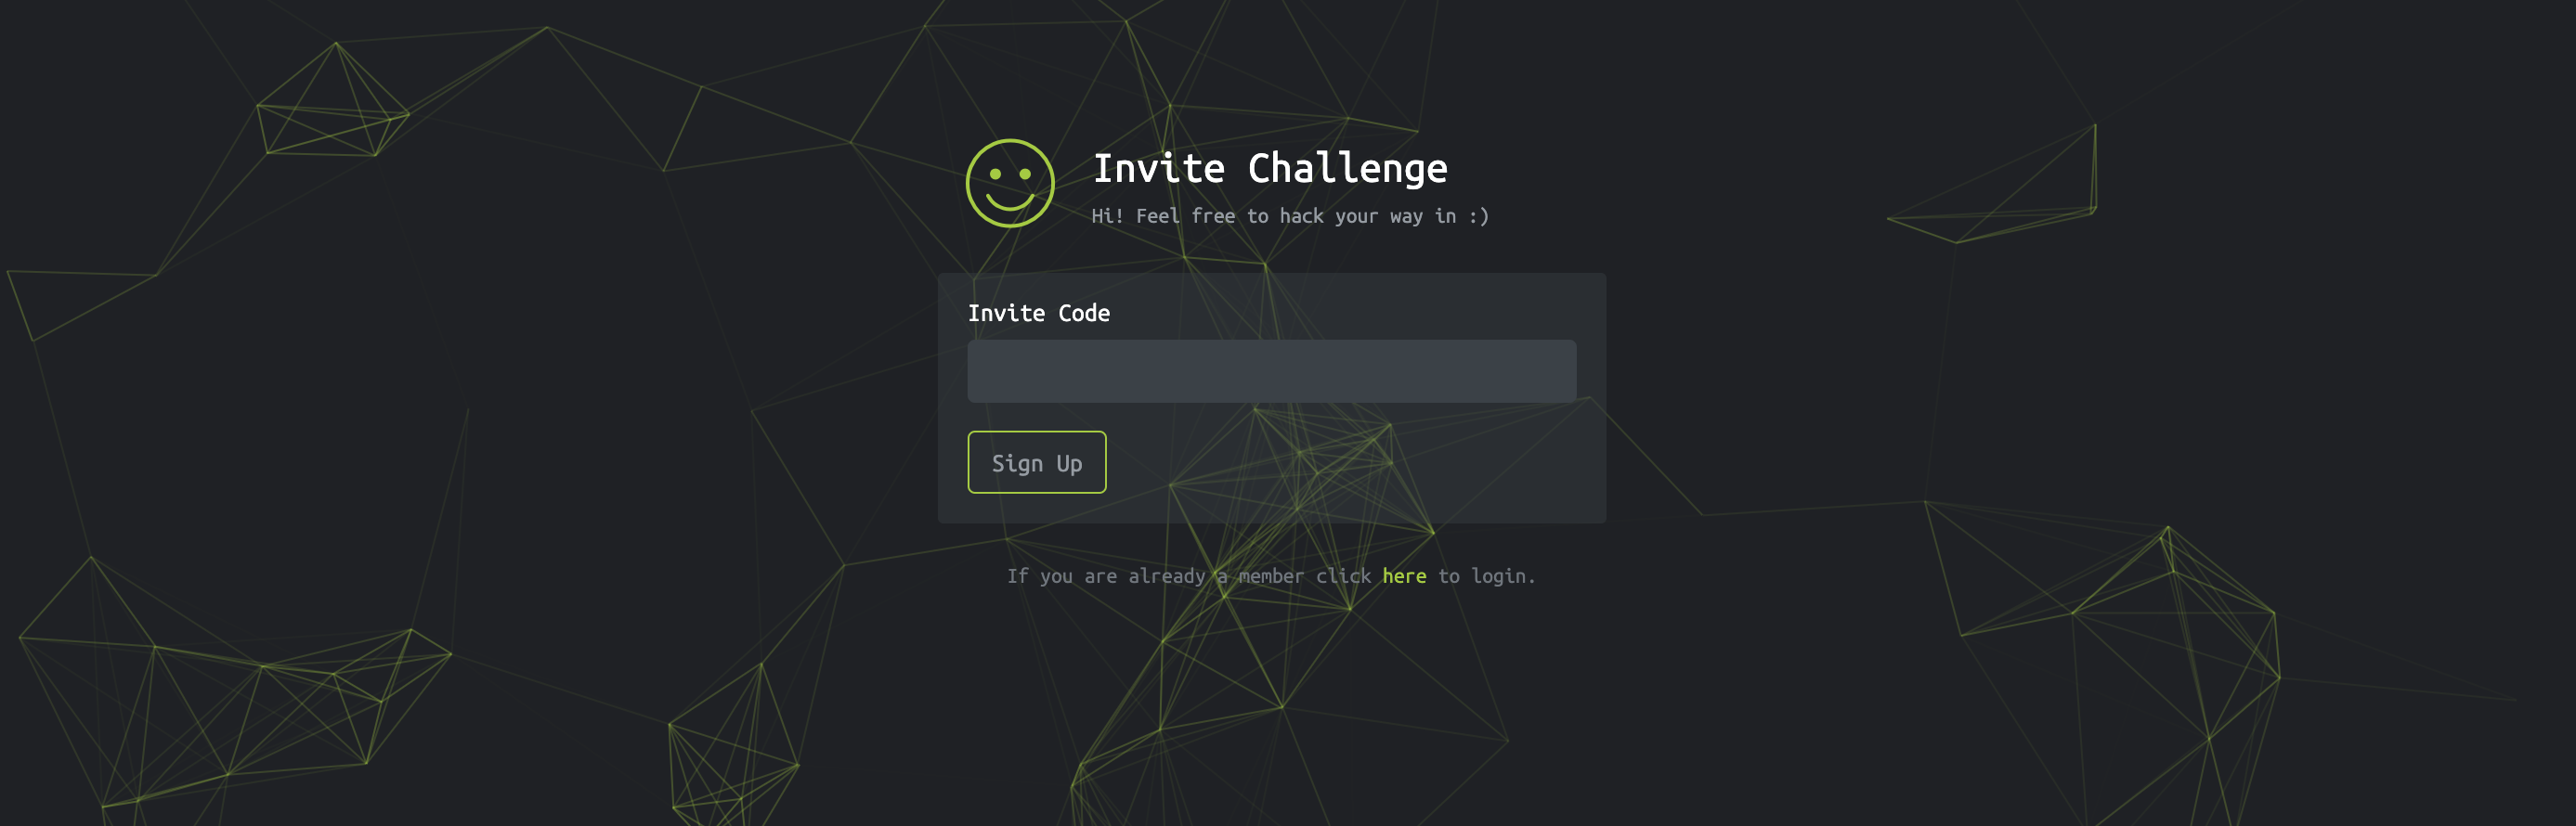 Invite Challenge.png